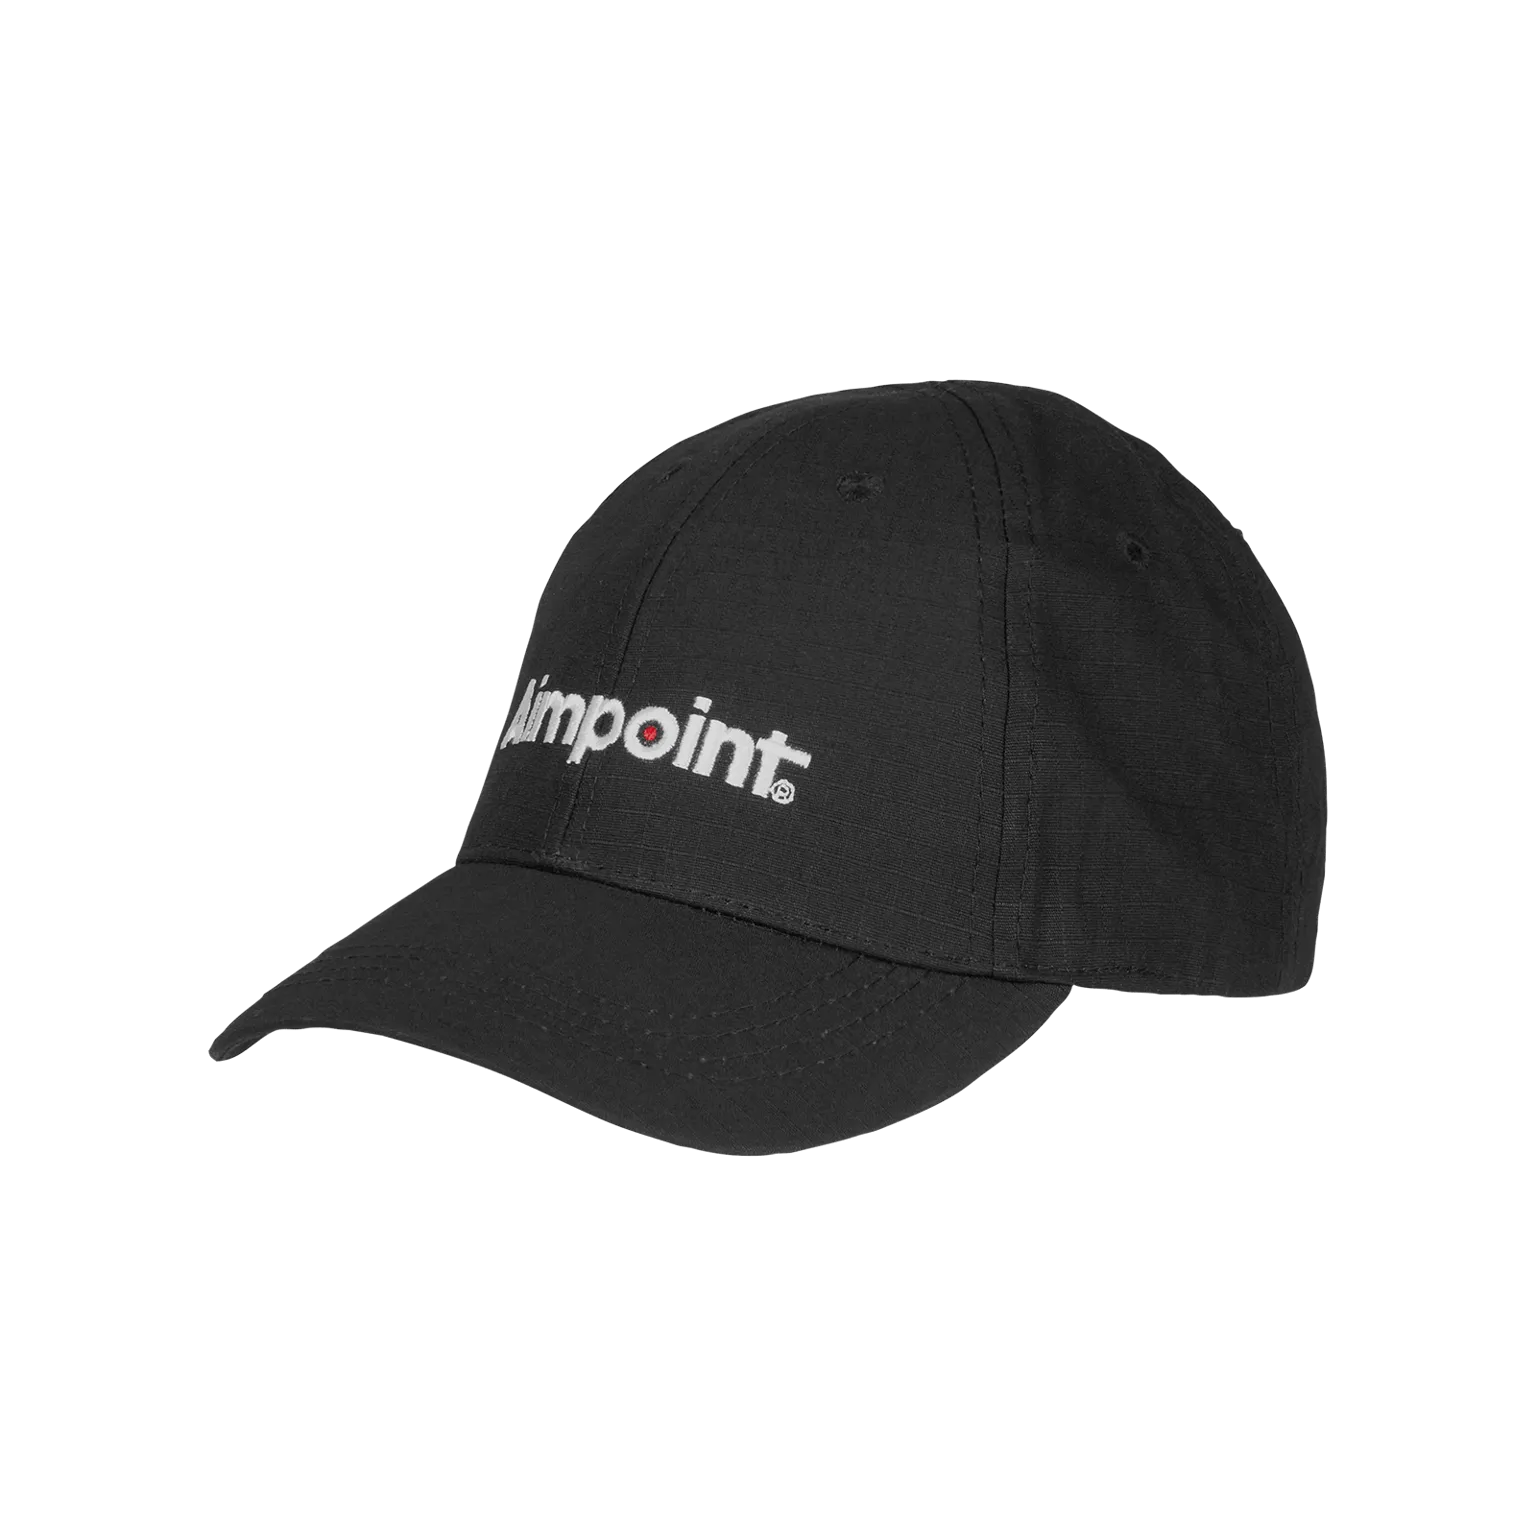 Aimpoint® Cap - Black Light weight cap  - 1